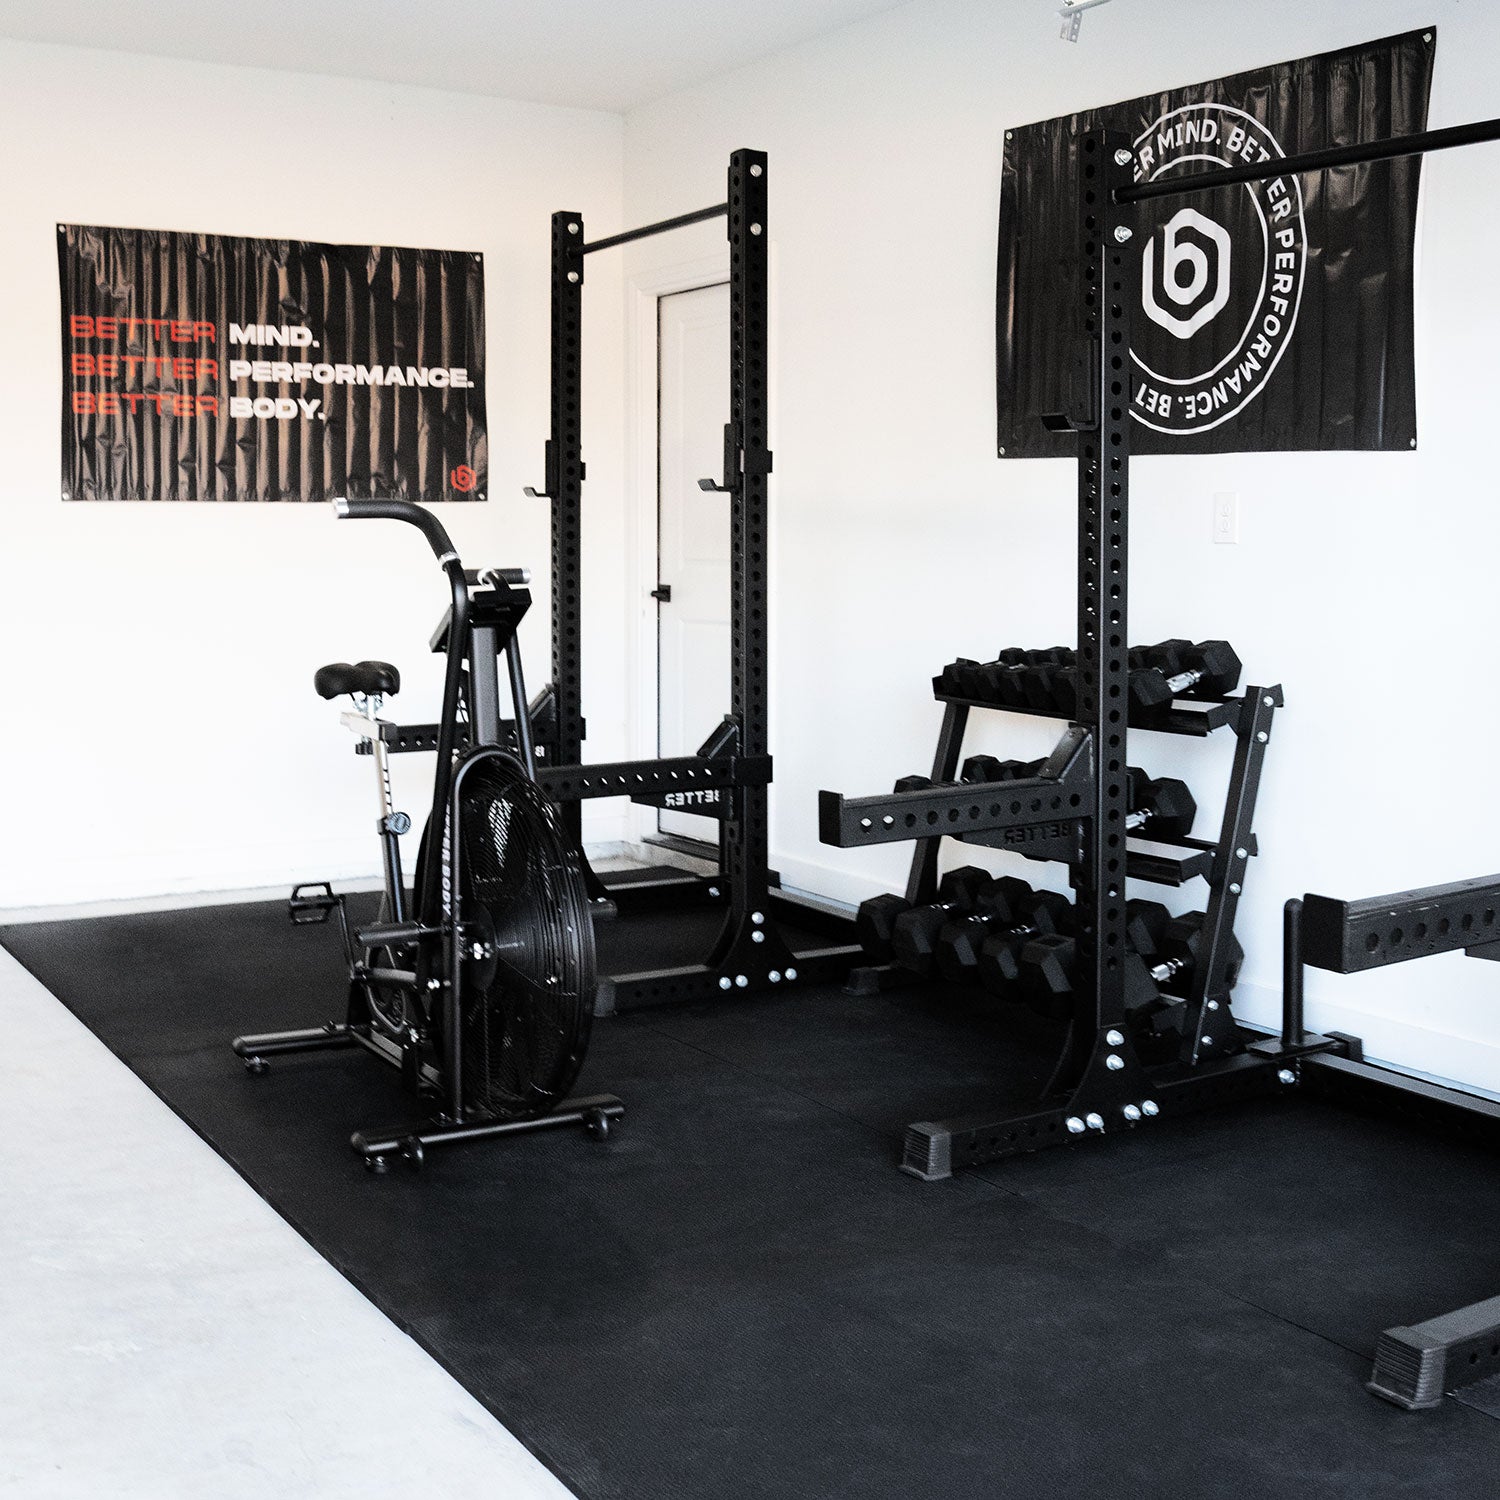 Exercise Machine 90-Degree Bench Indoor Fitness Equipment Gym